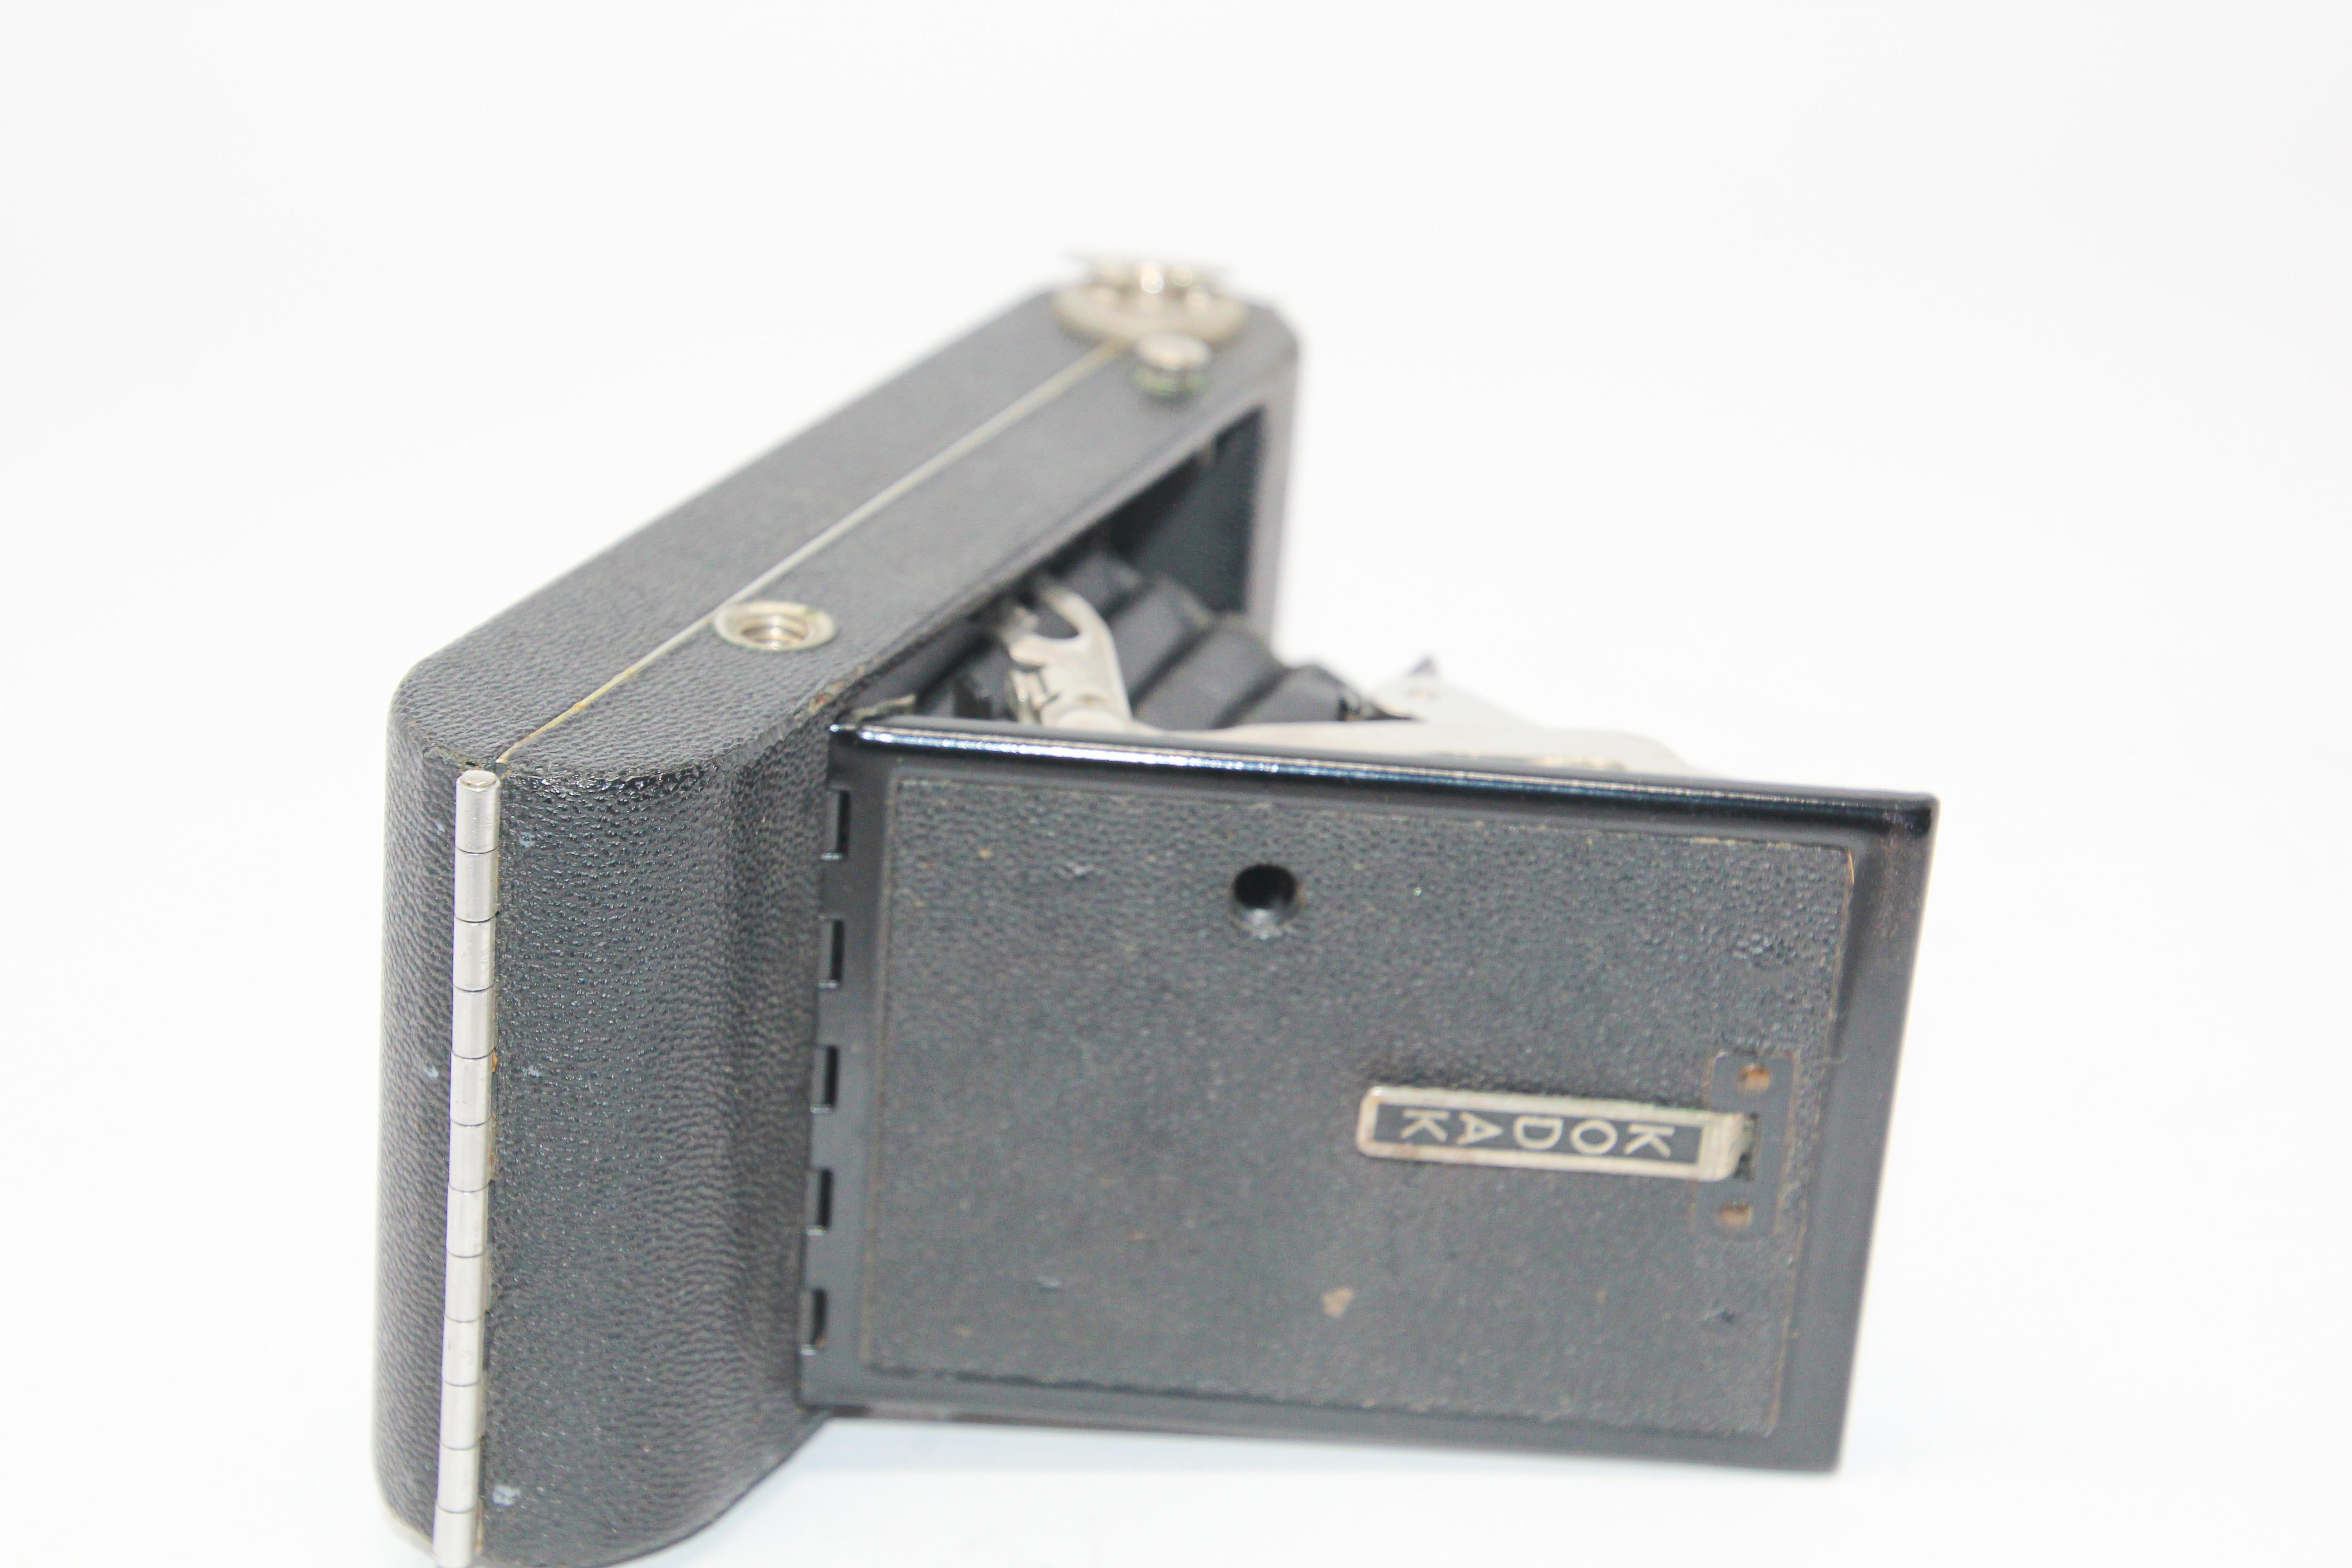 vintage kodak camera in leather case